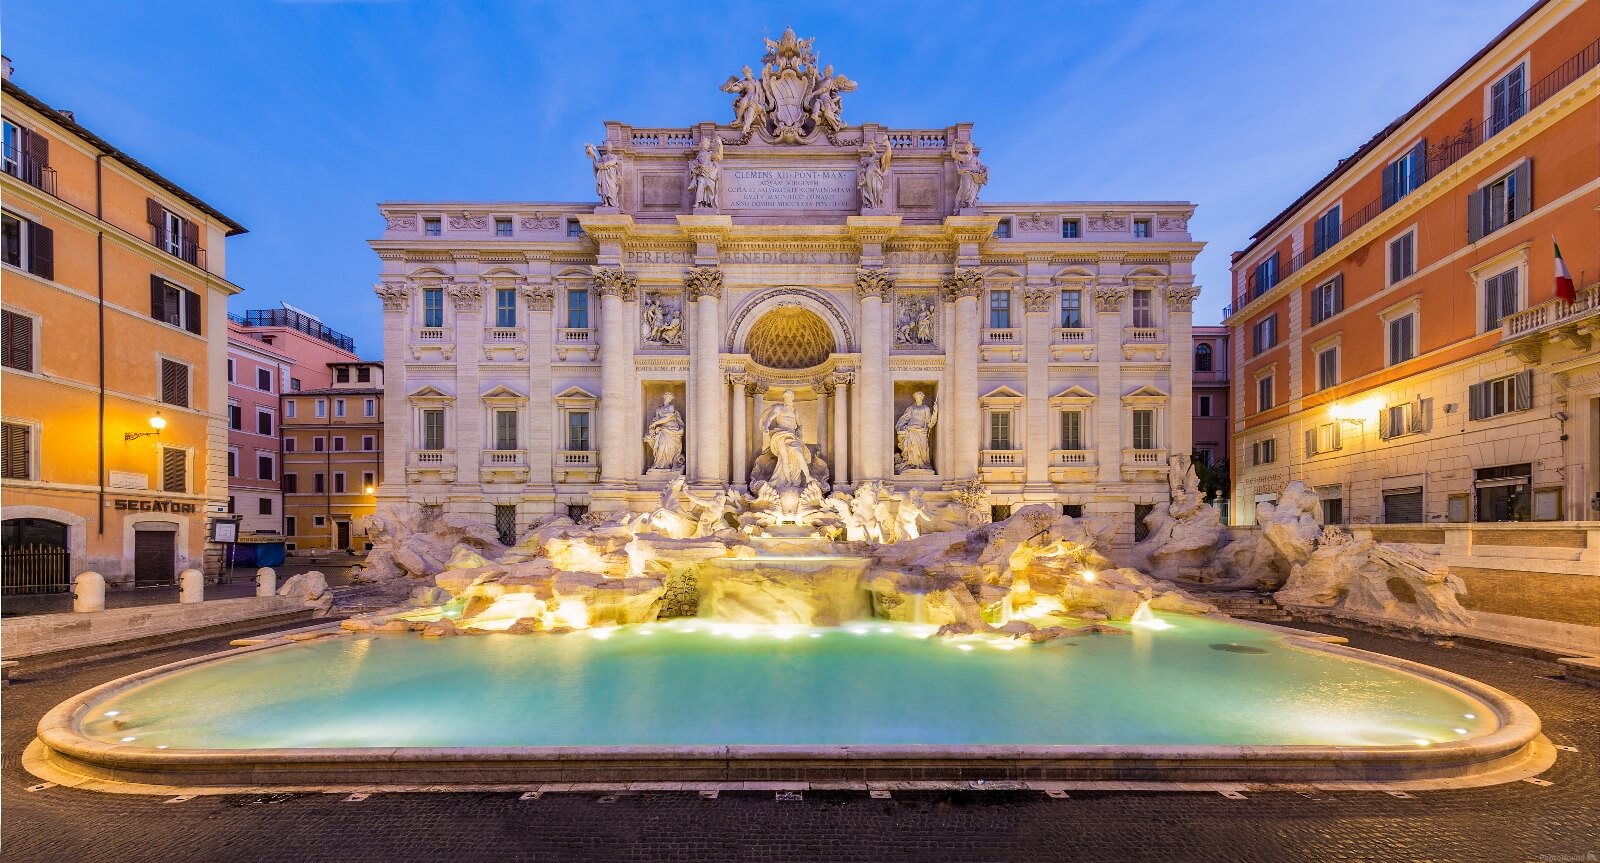 Image of Fontana di Trevi by Jeff Martin